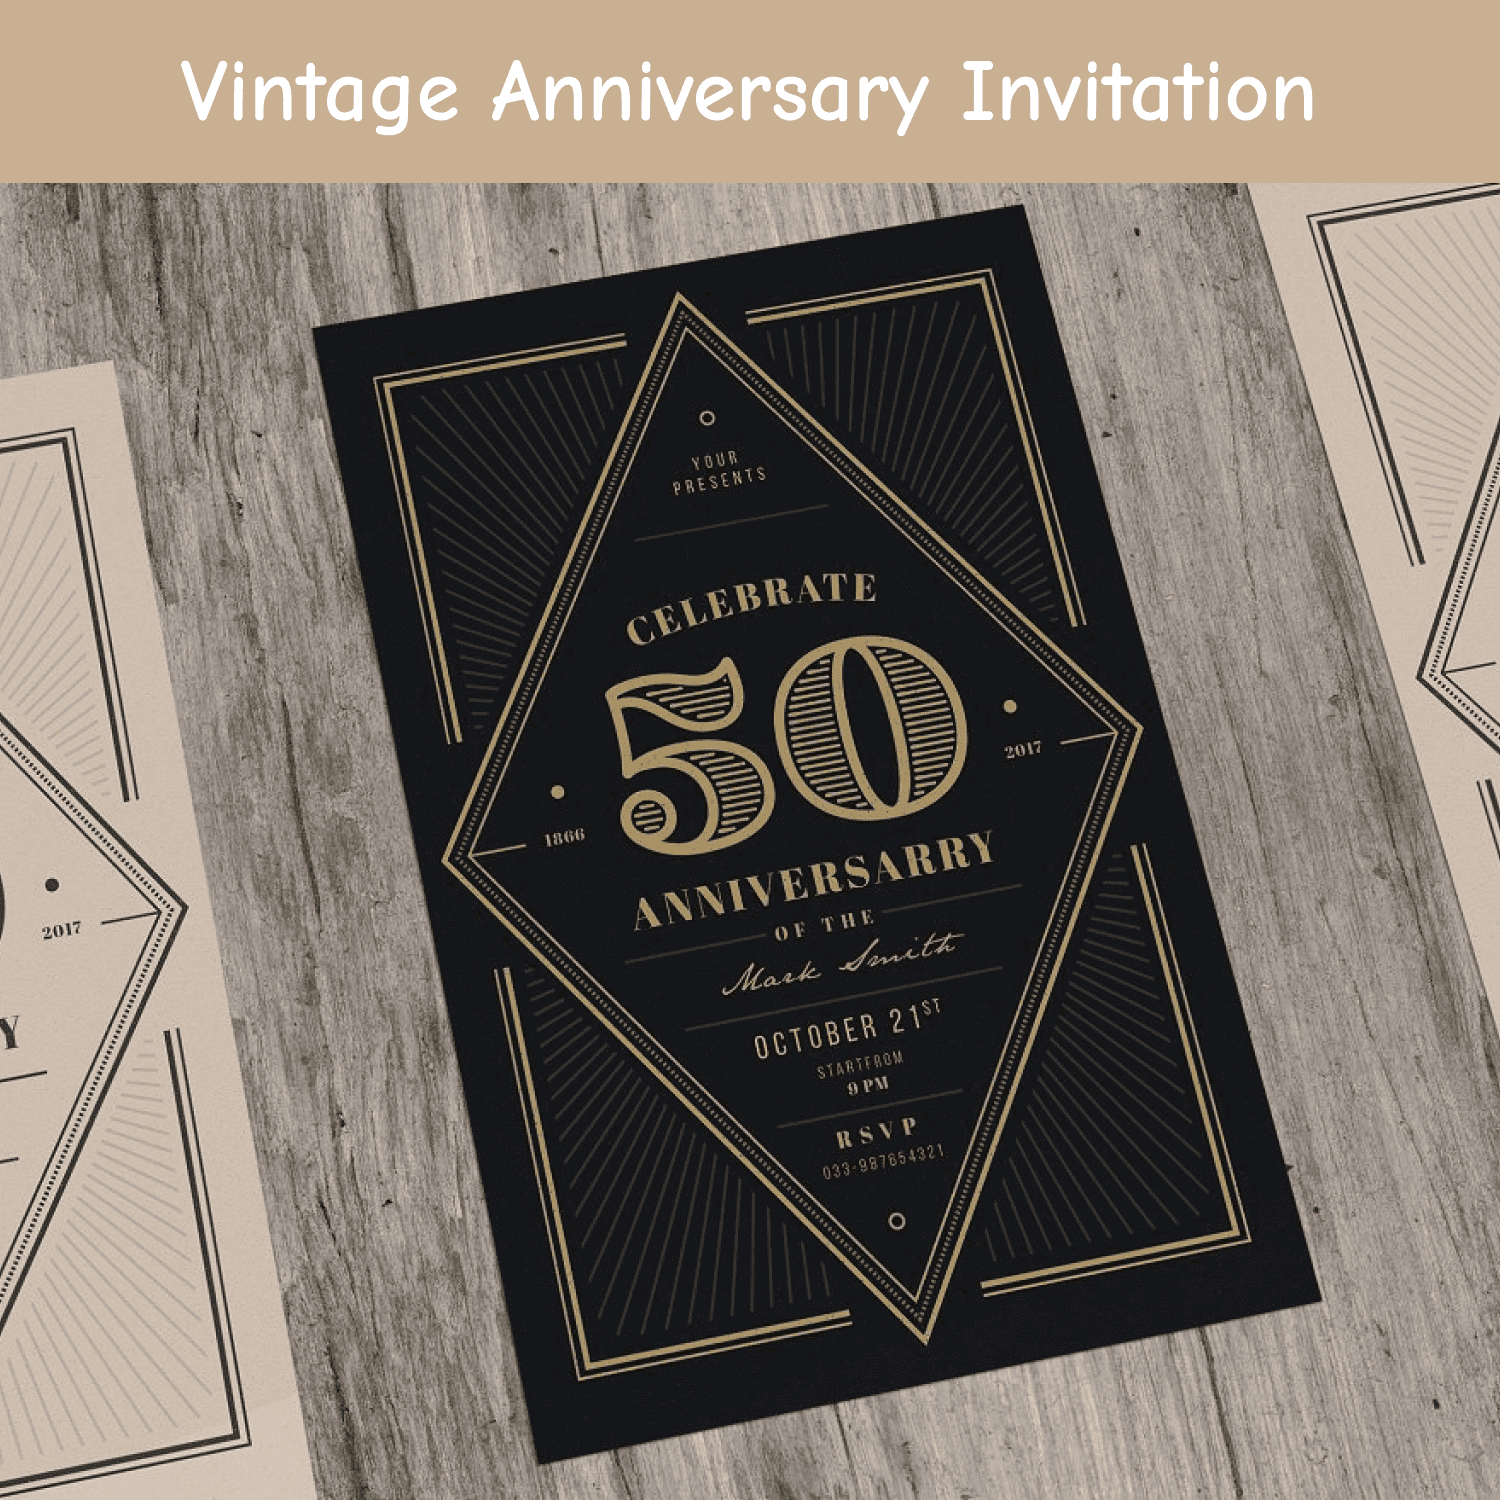 Vintage Anniversary Invitation preview image.